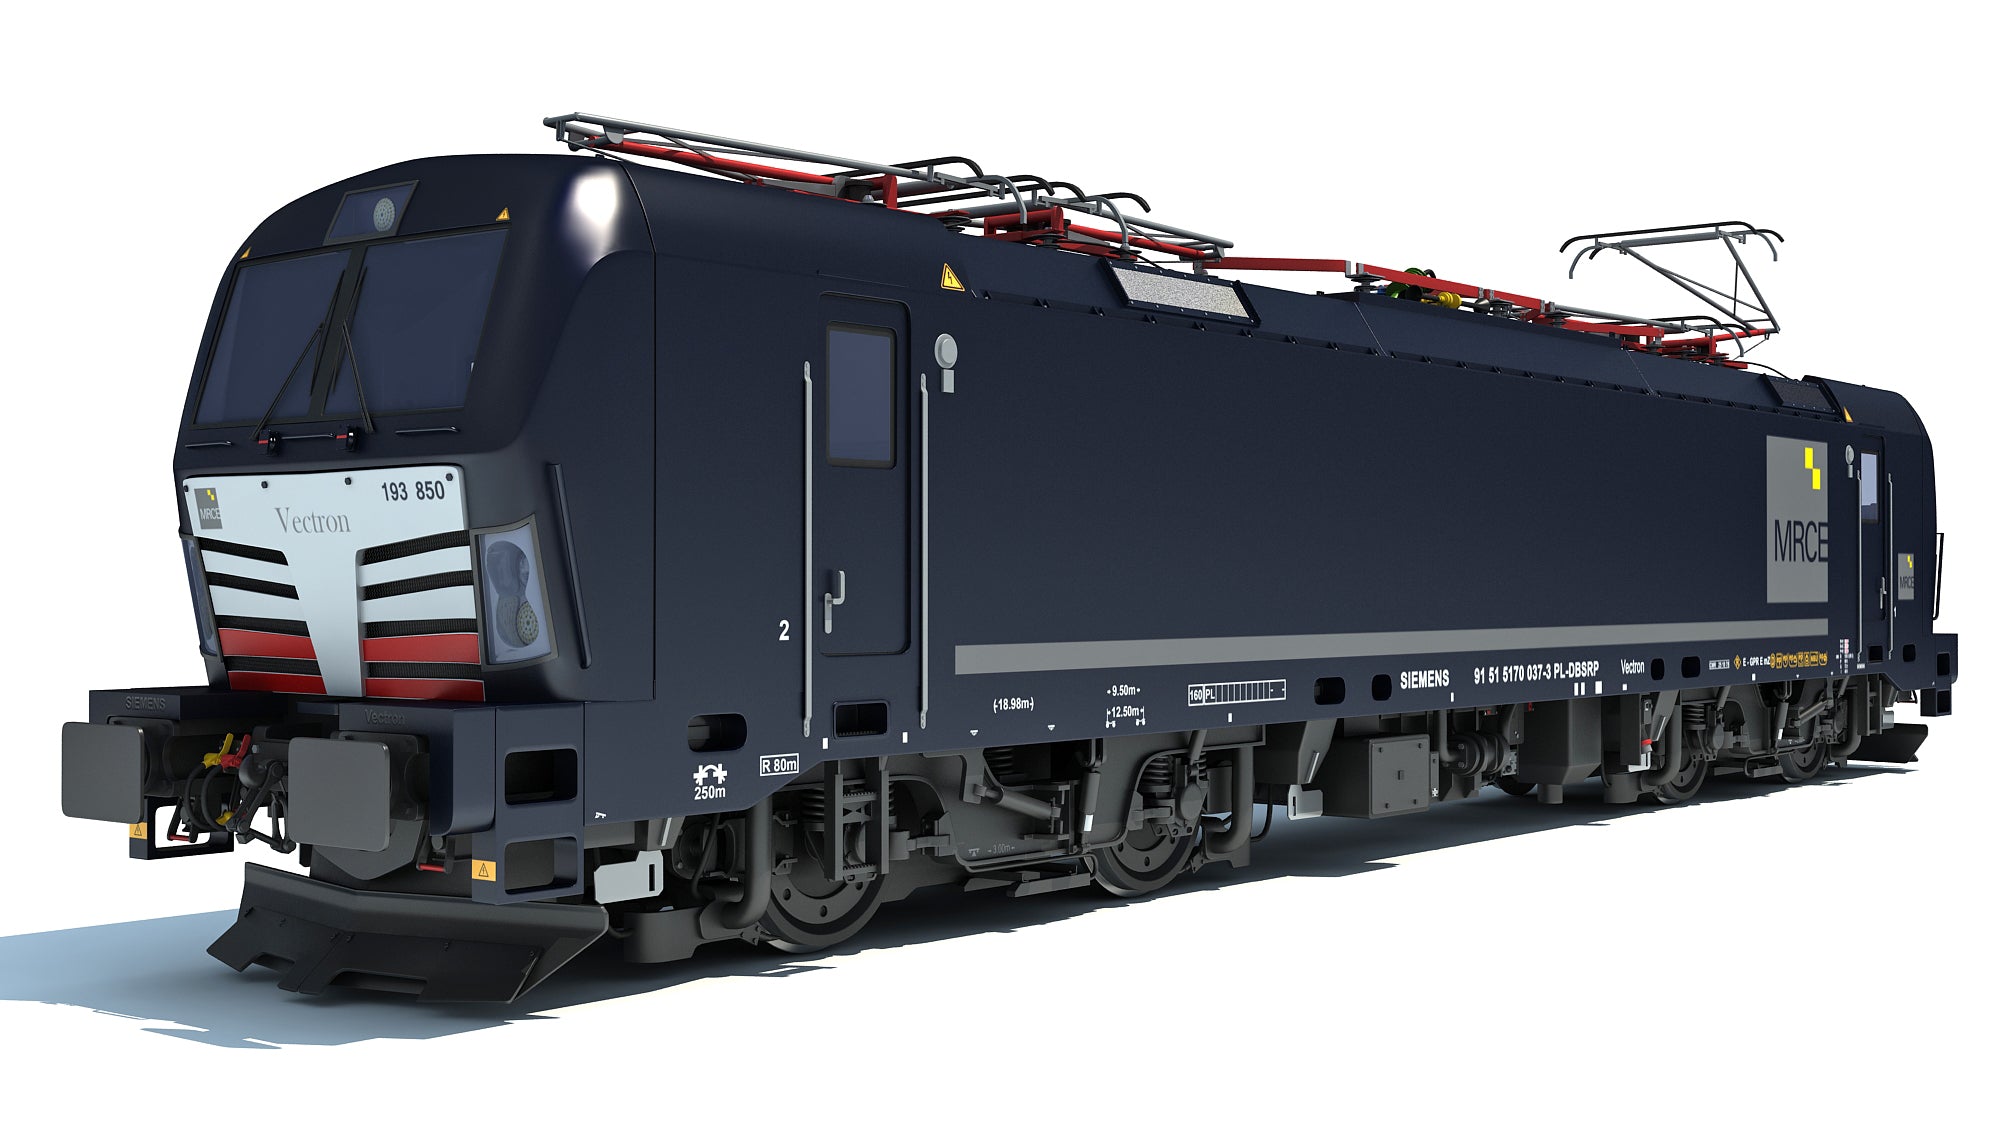 MRCE Siemens Vectron Locomotive